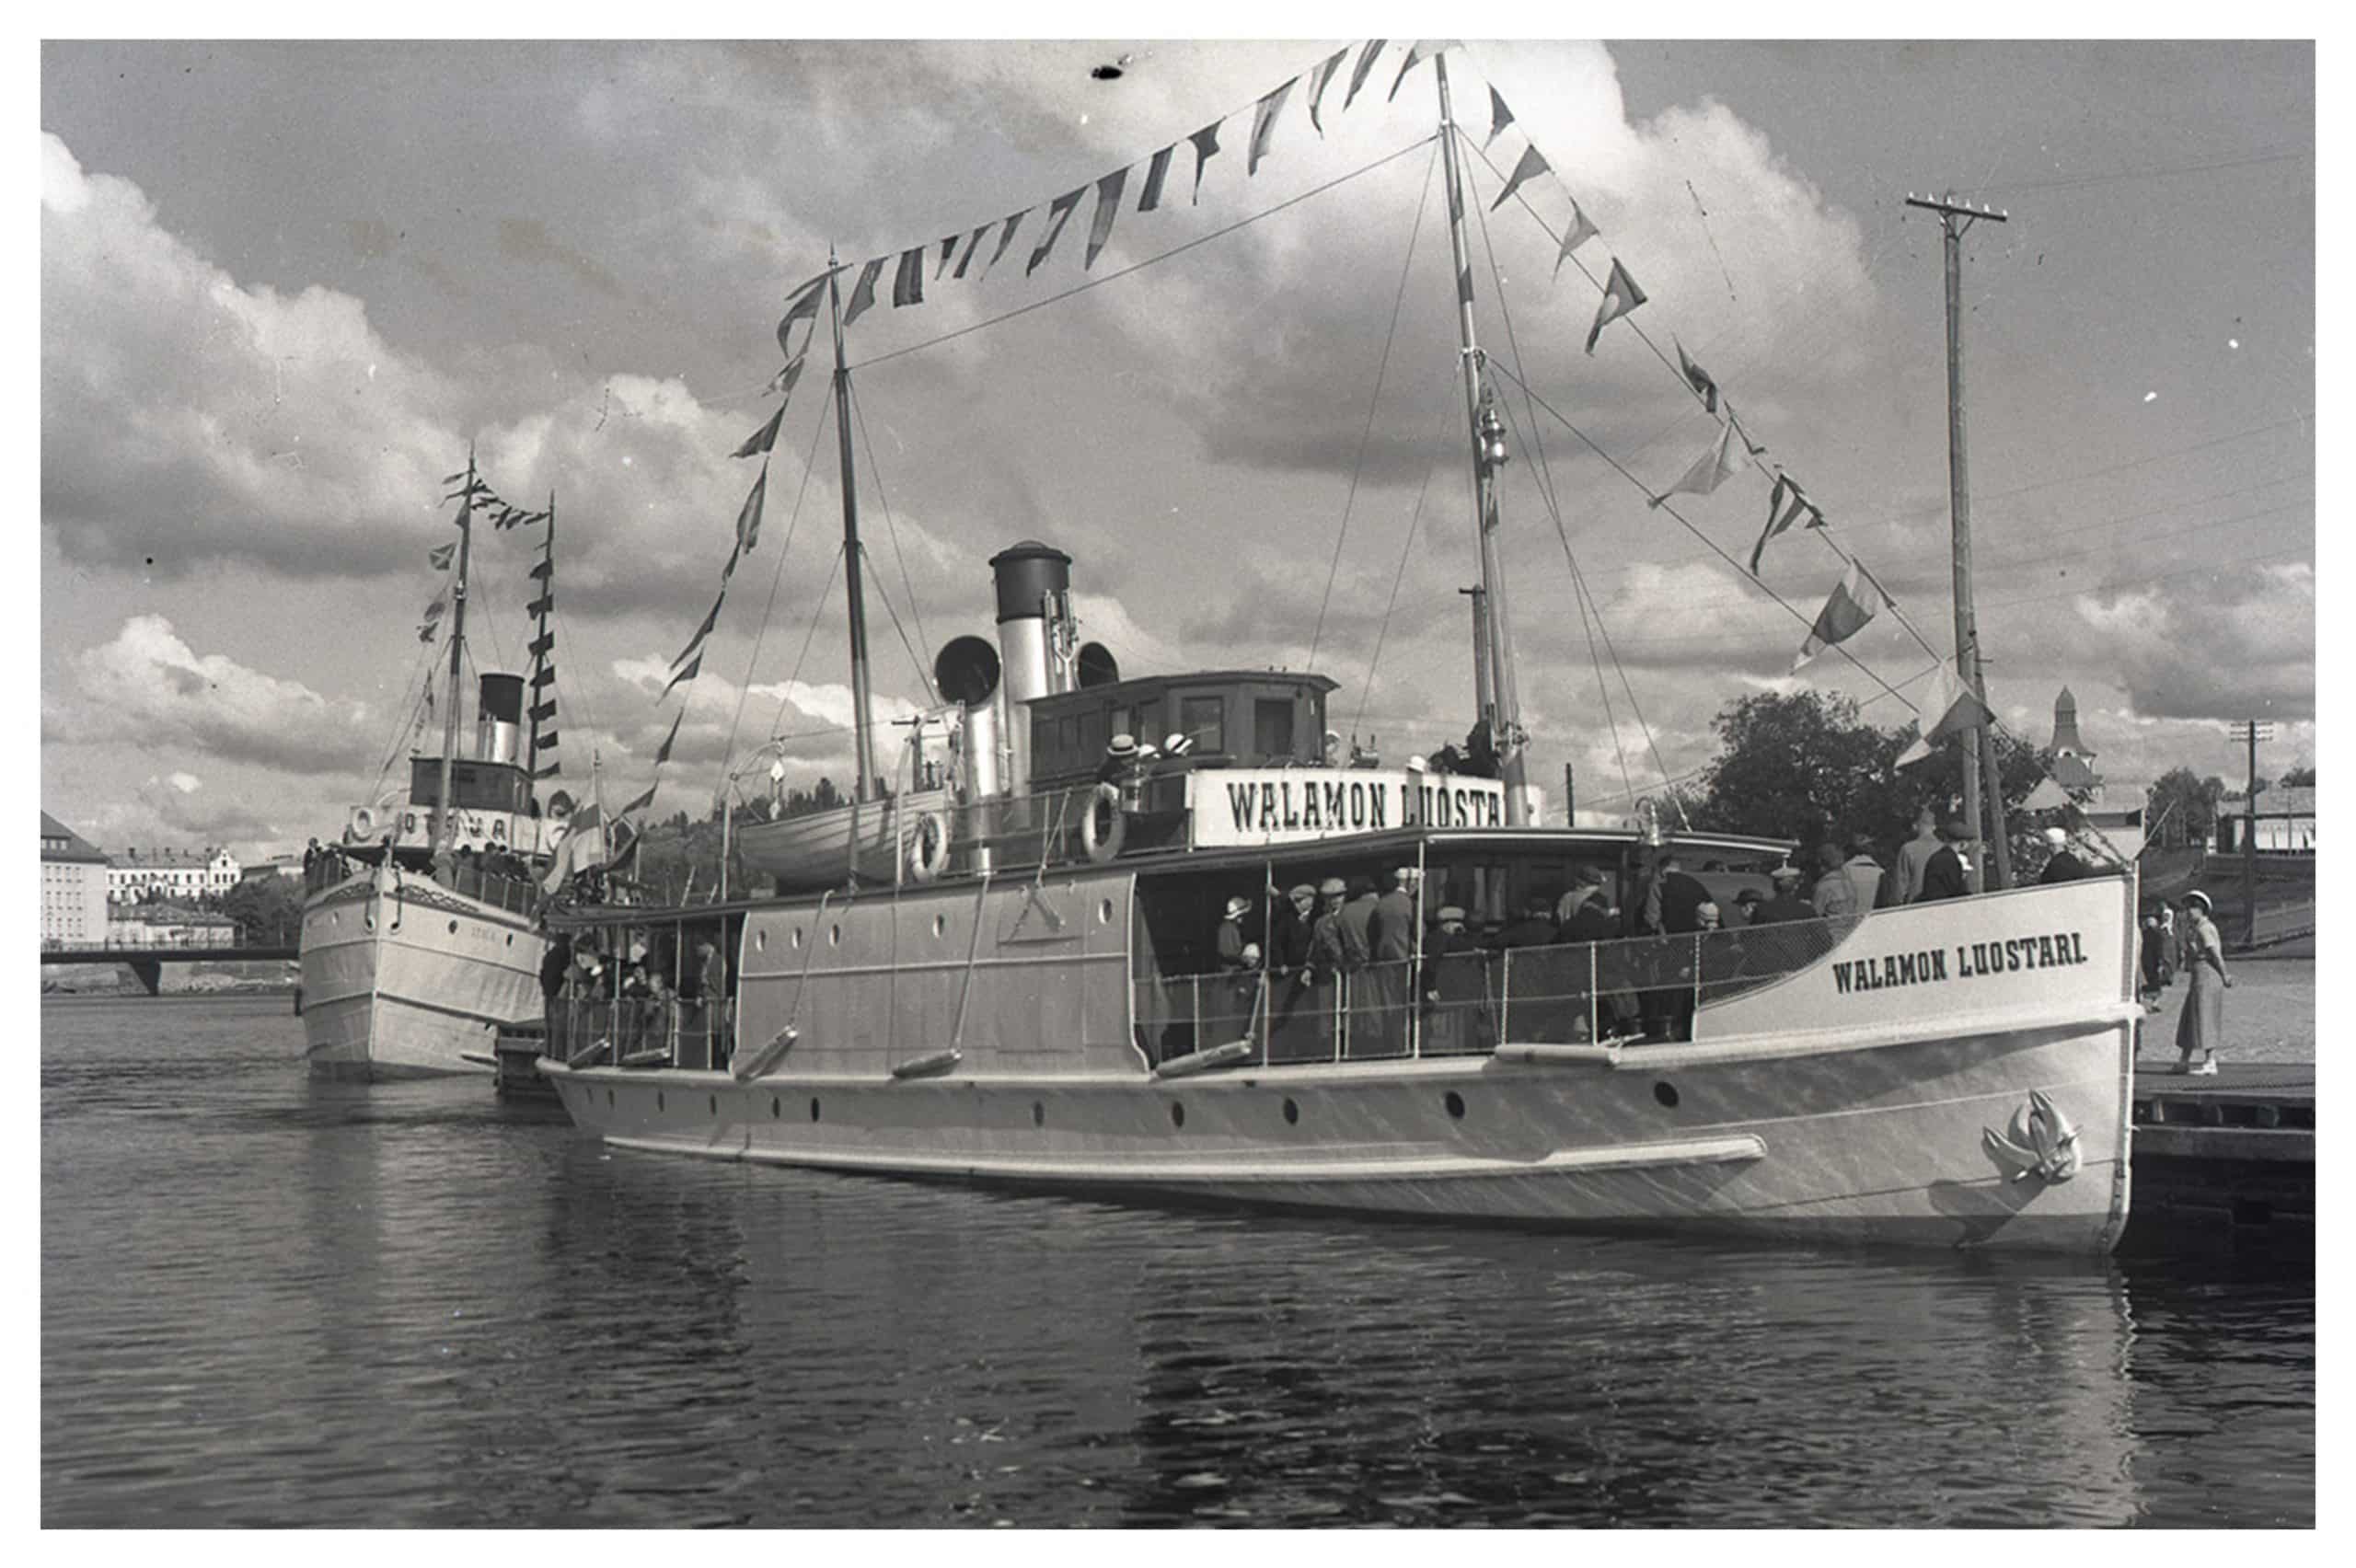 Historical photo of the steamer Walamon Loustari divers24.co.uk